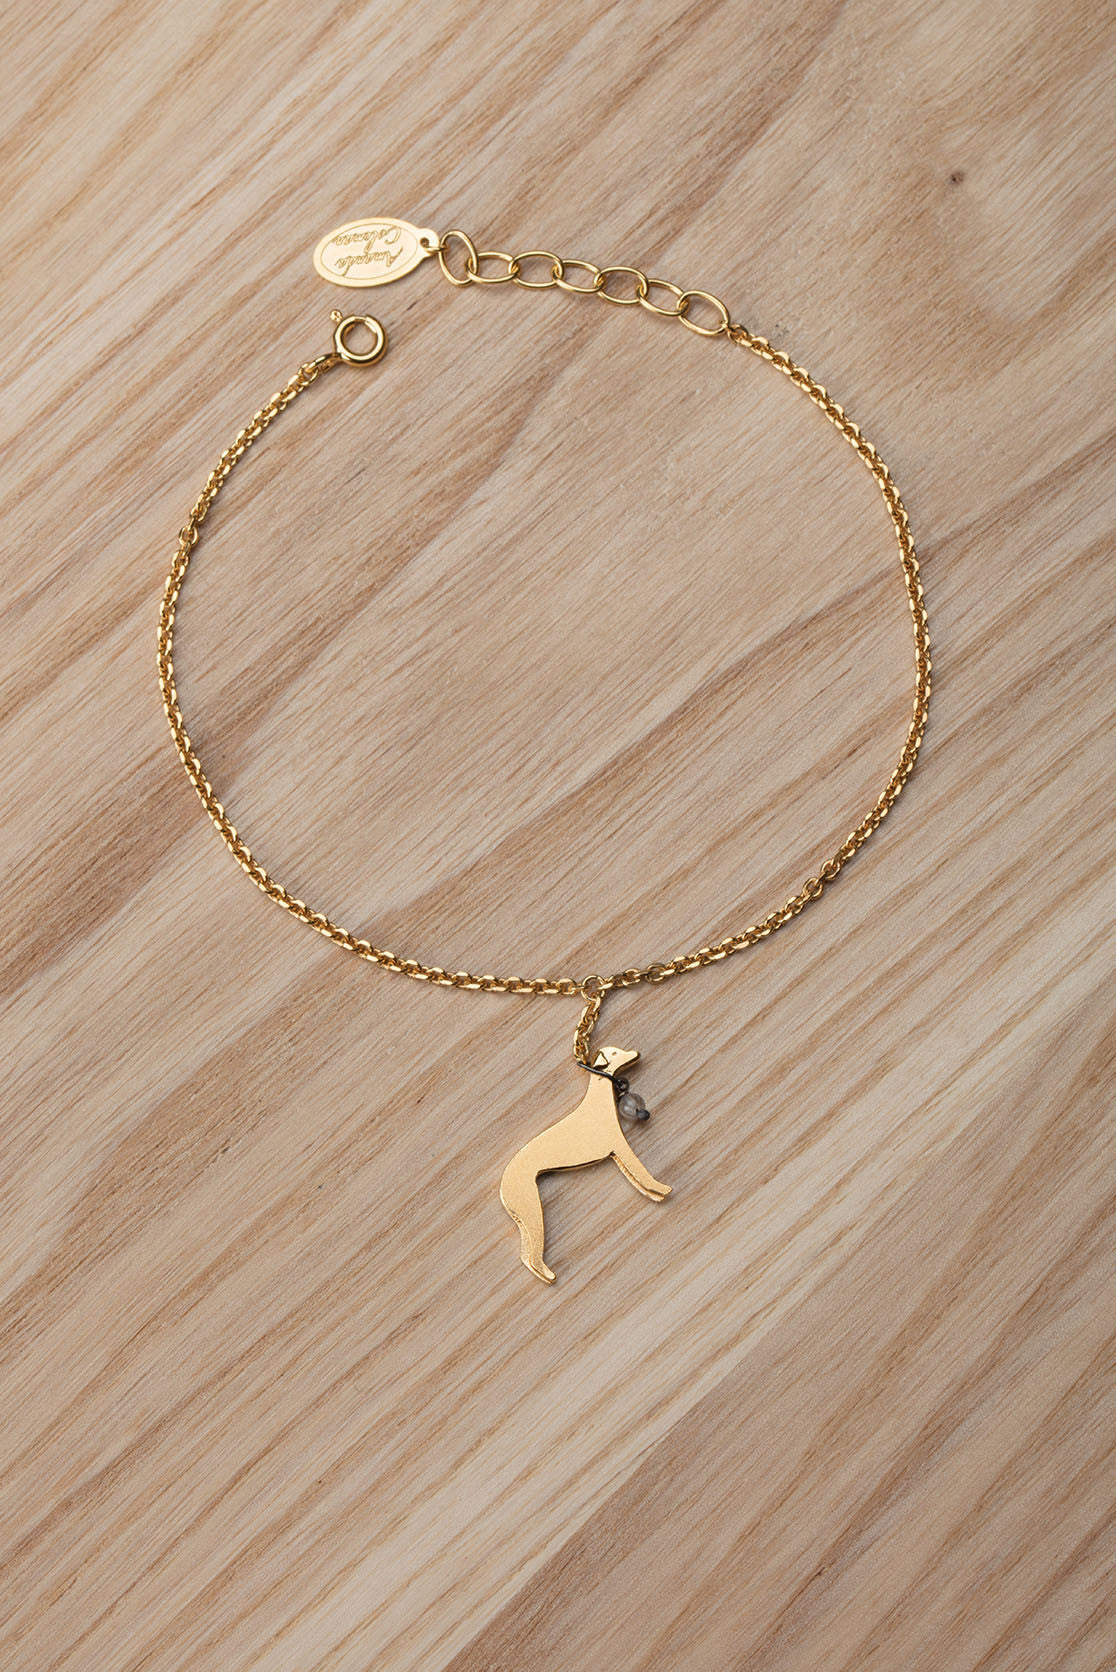 Greyhound bracelet in sterling silver, gold plate or black